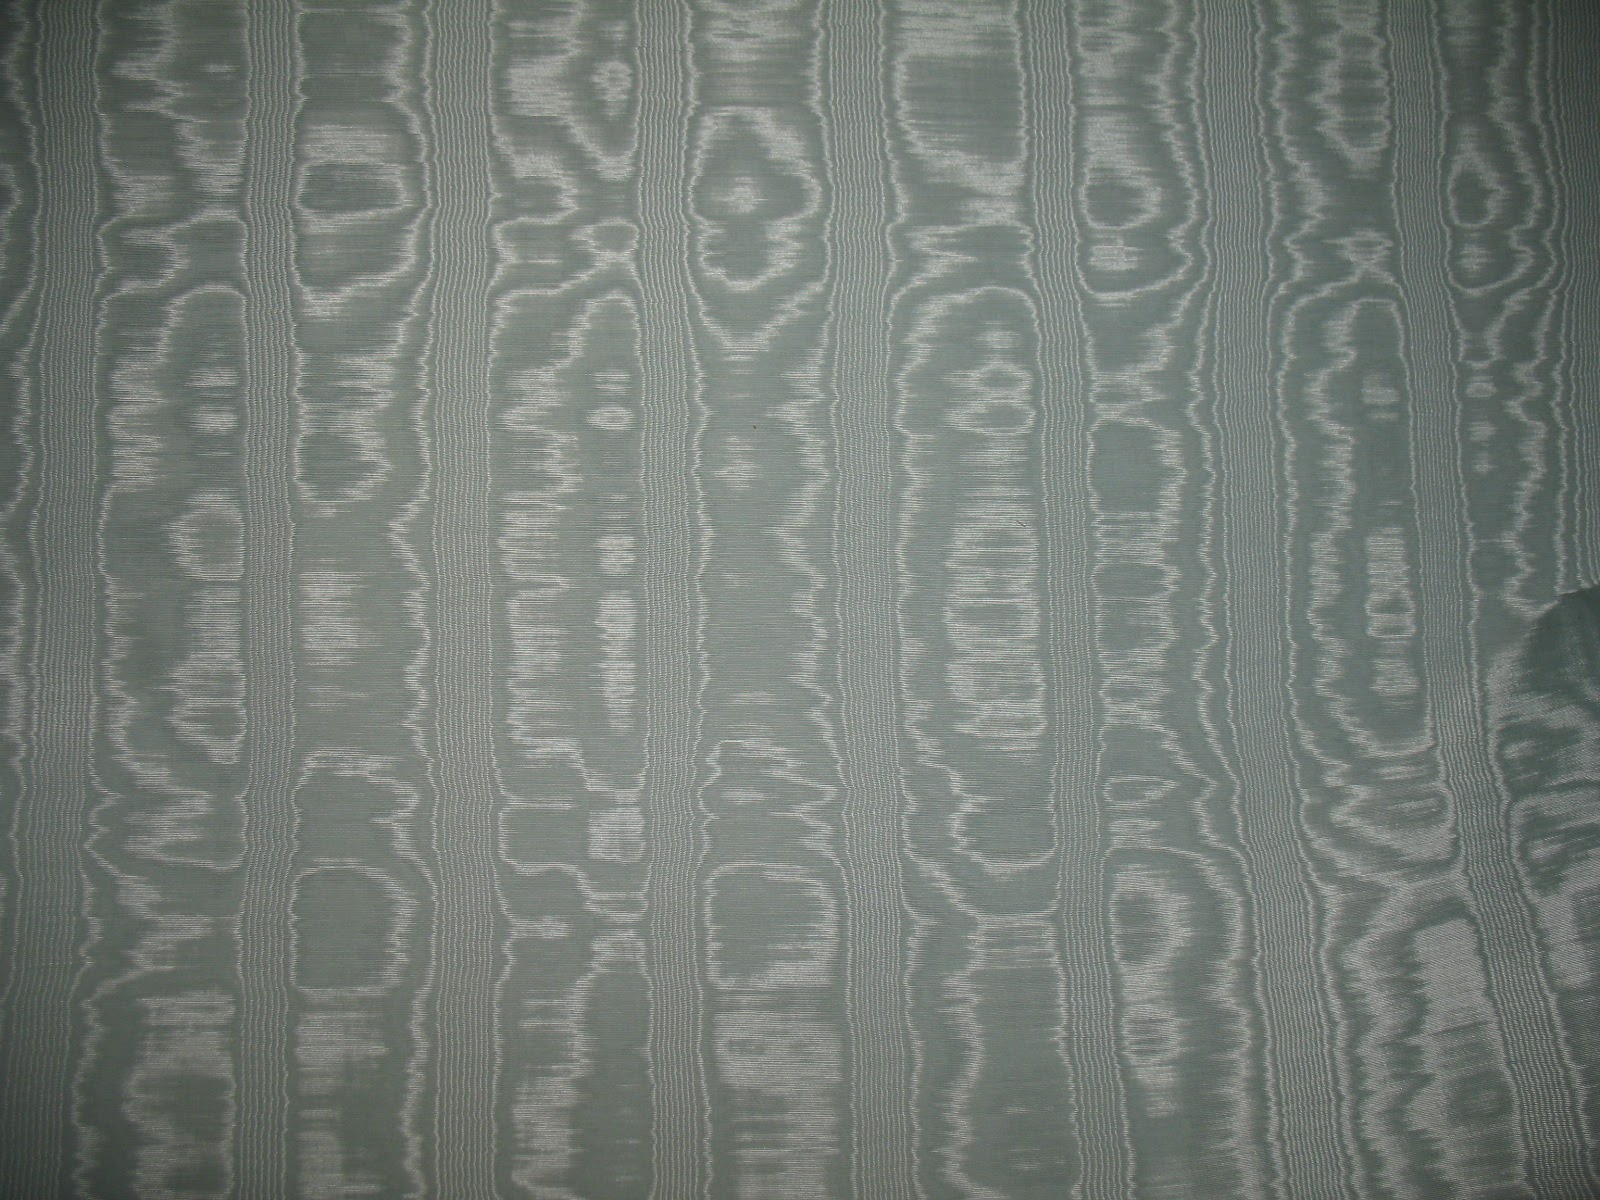 Watered Silk Moire Wallpaper PicsWallpapercom